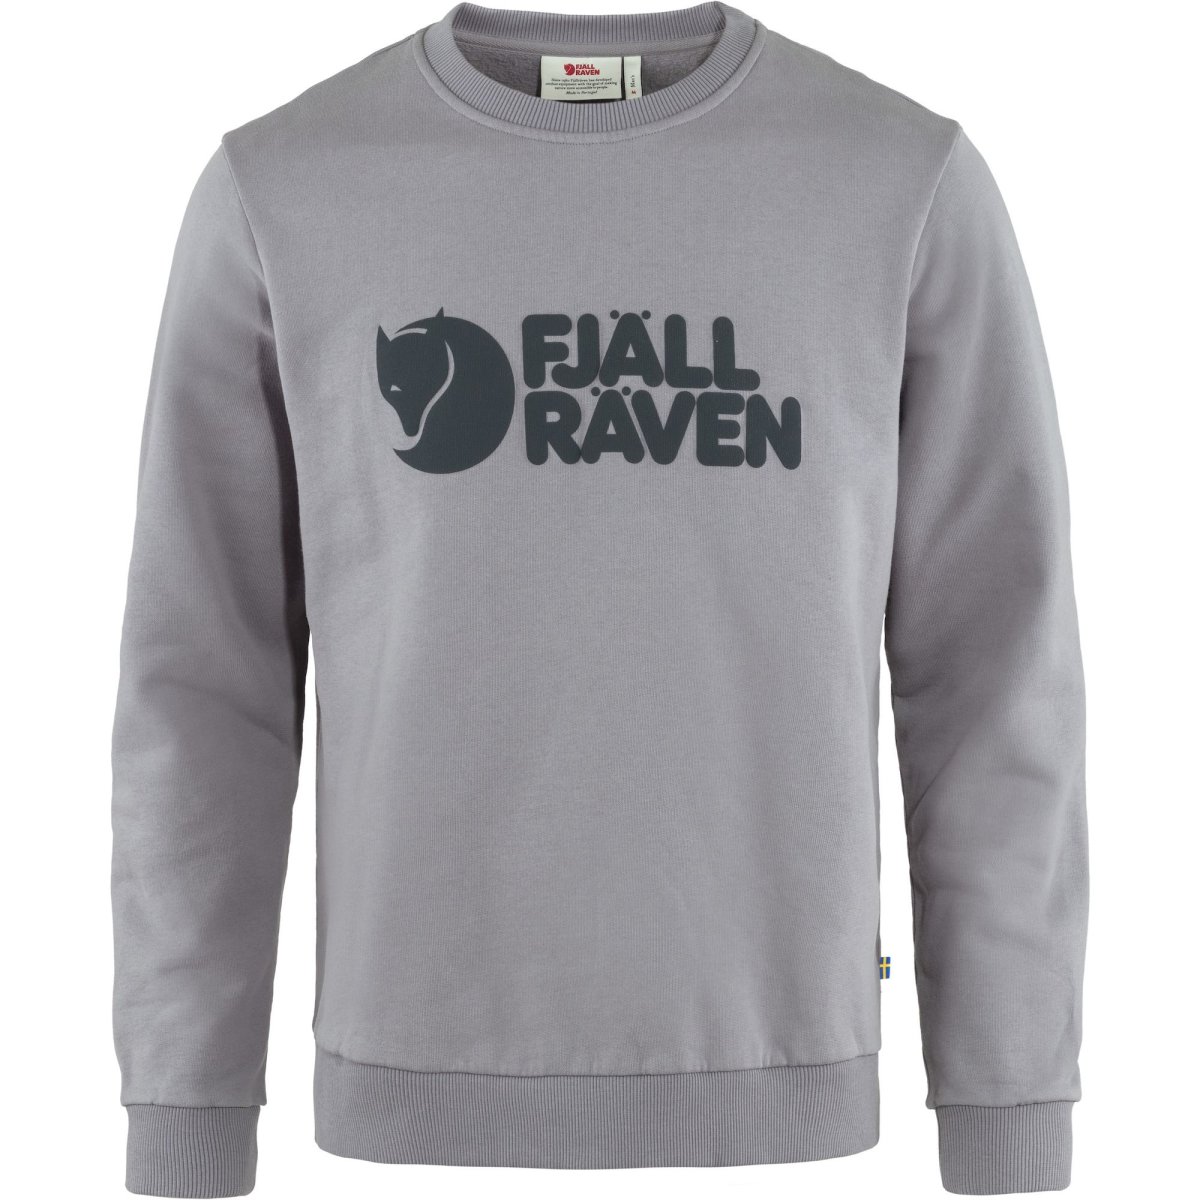 Fj&auml;llr&auml;ven Logo Sweater Sweatshirt  84142  flint grey Herren Pullover Sweater Shirt